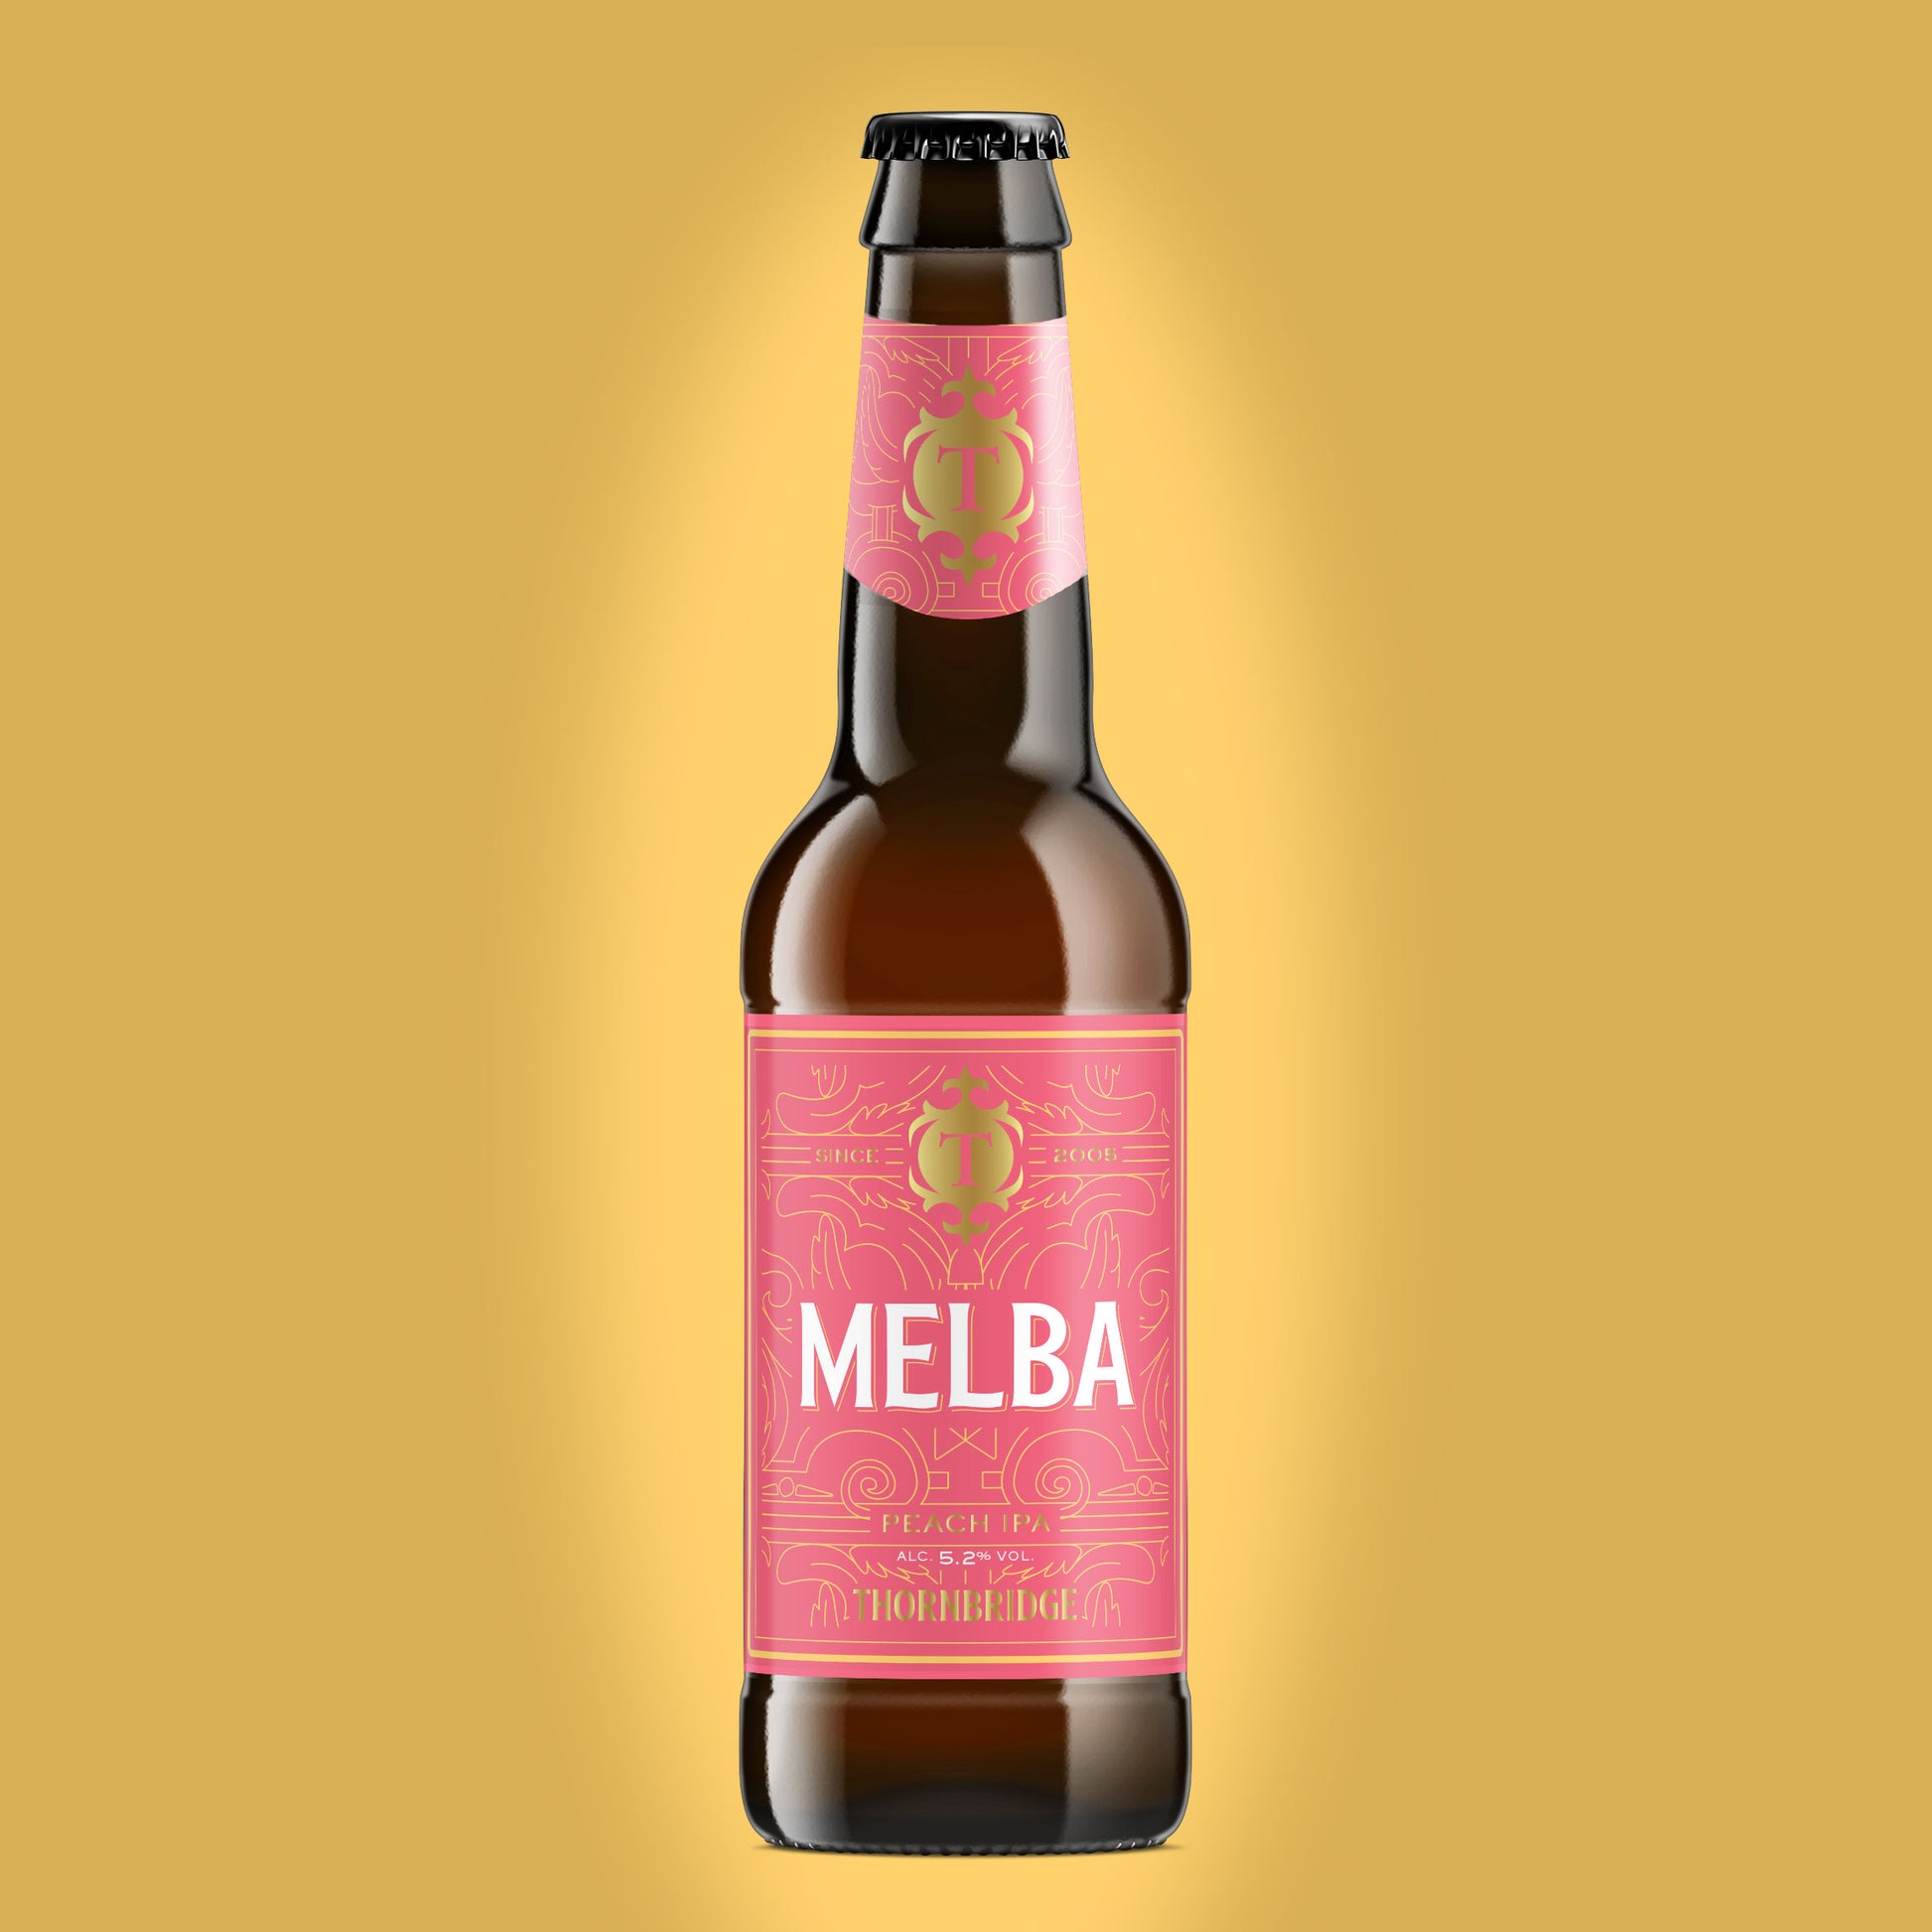 Melba 5.2% Peach IPA Beer - Single Bottle Thornbridge